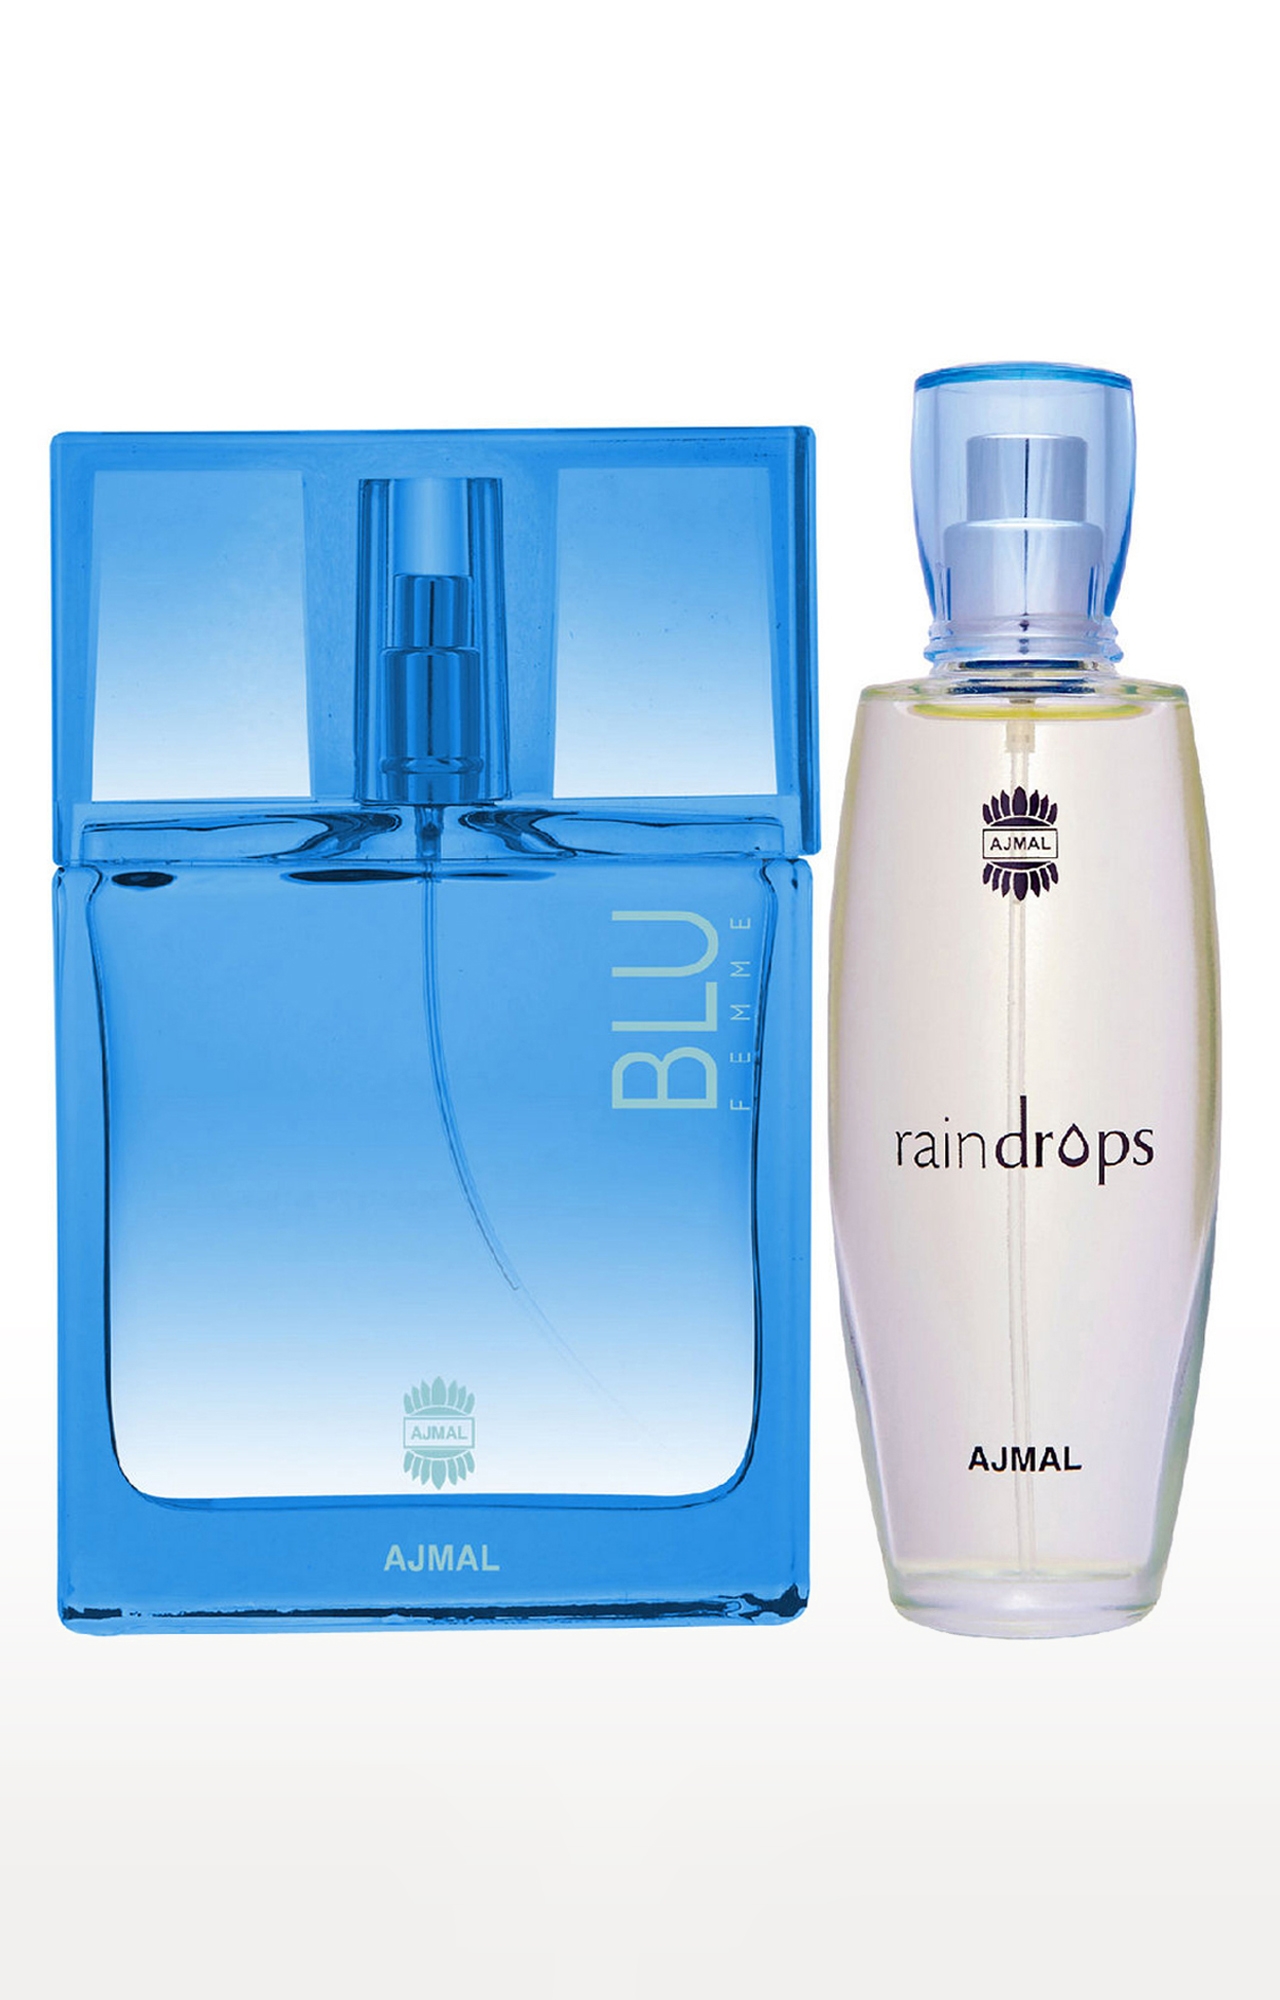 Ajmal Blu Femme EDP Perfume 50ml for Women and Raindrops EDP Perfume 50ml for Women